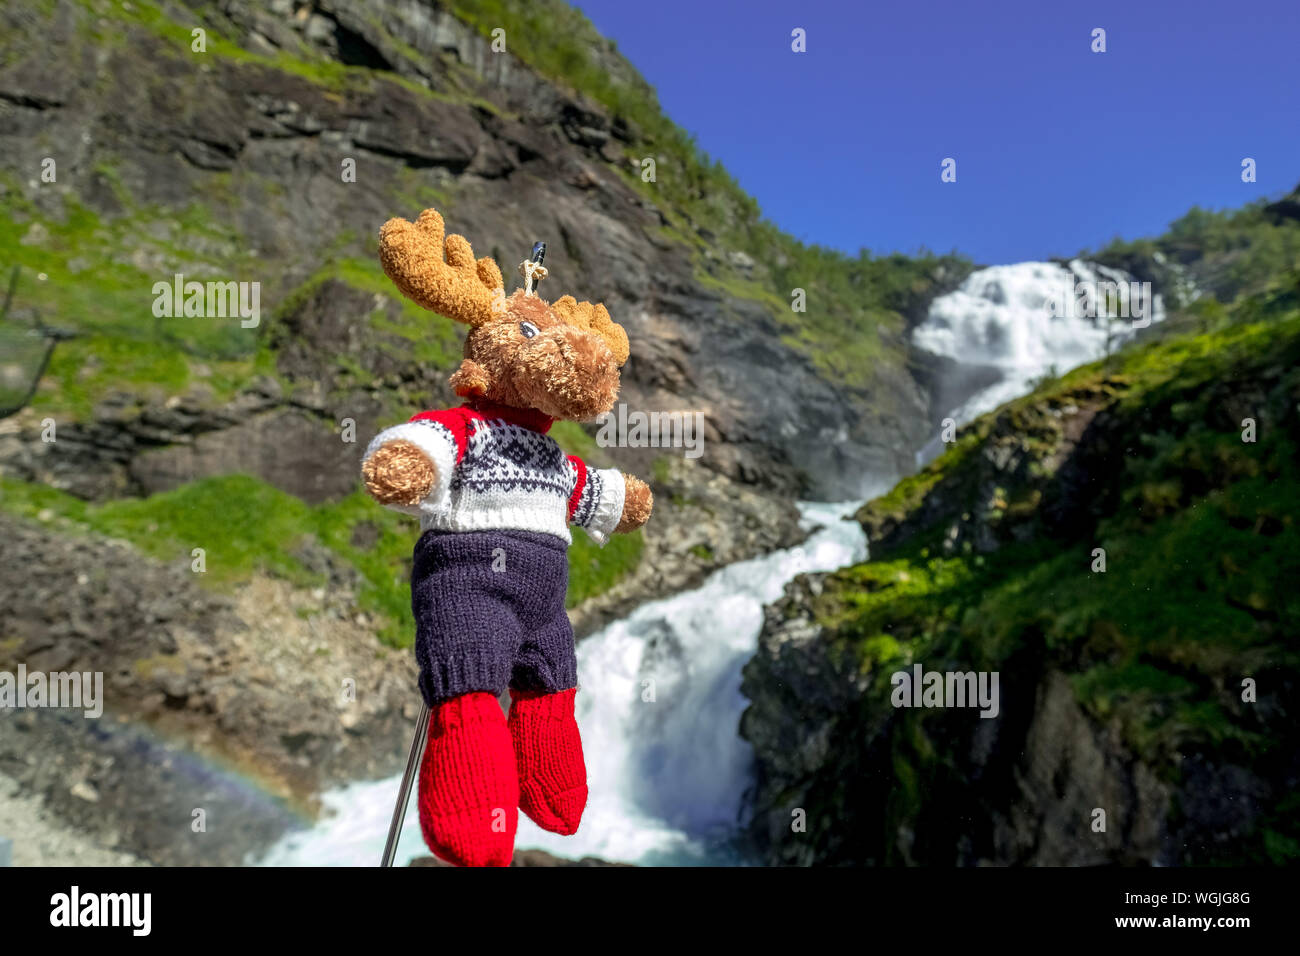 Kjosfossen waterfall, mascot moose in front of waterfall, mountain, rock faces, meadow, sky, Fureberget, Flåm, Sogn og Fjordane, Norway, Scandinavia, Stock Photo